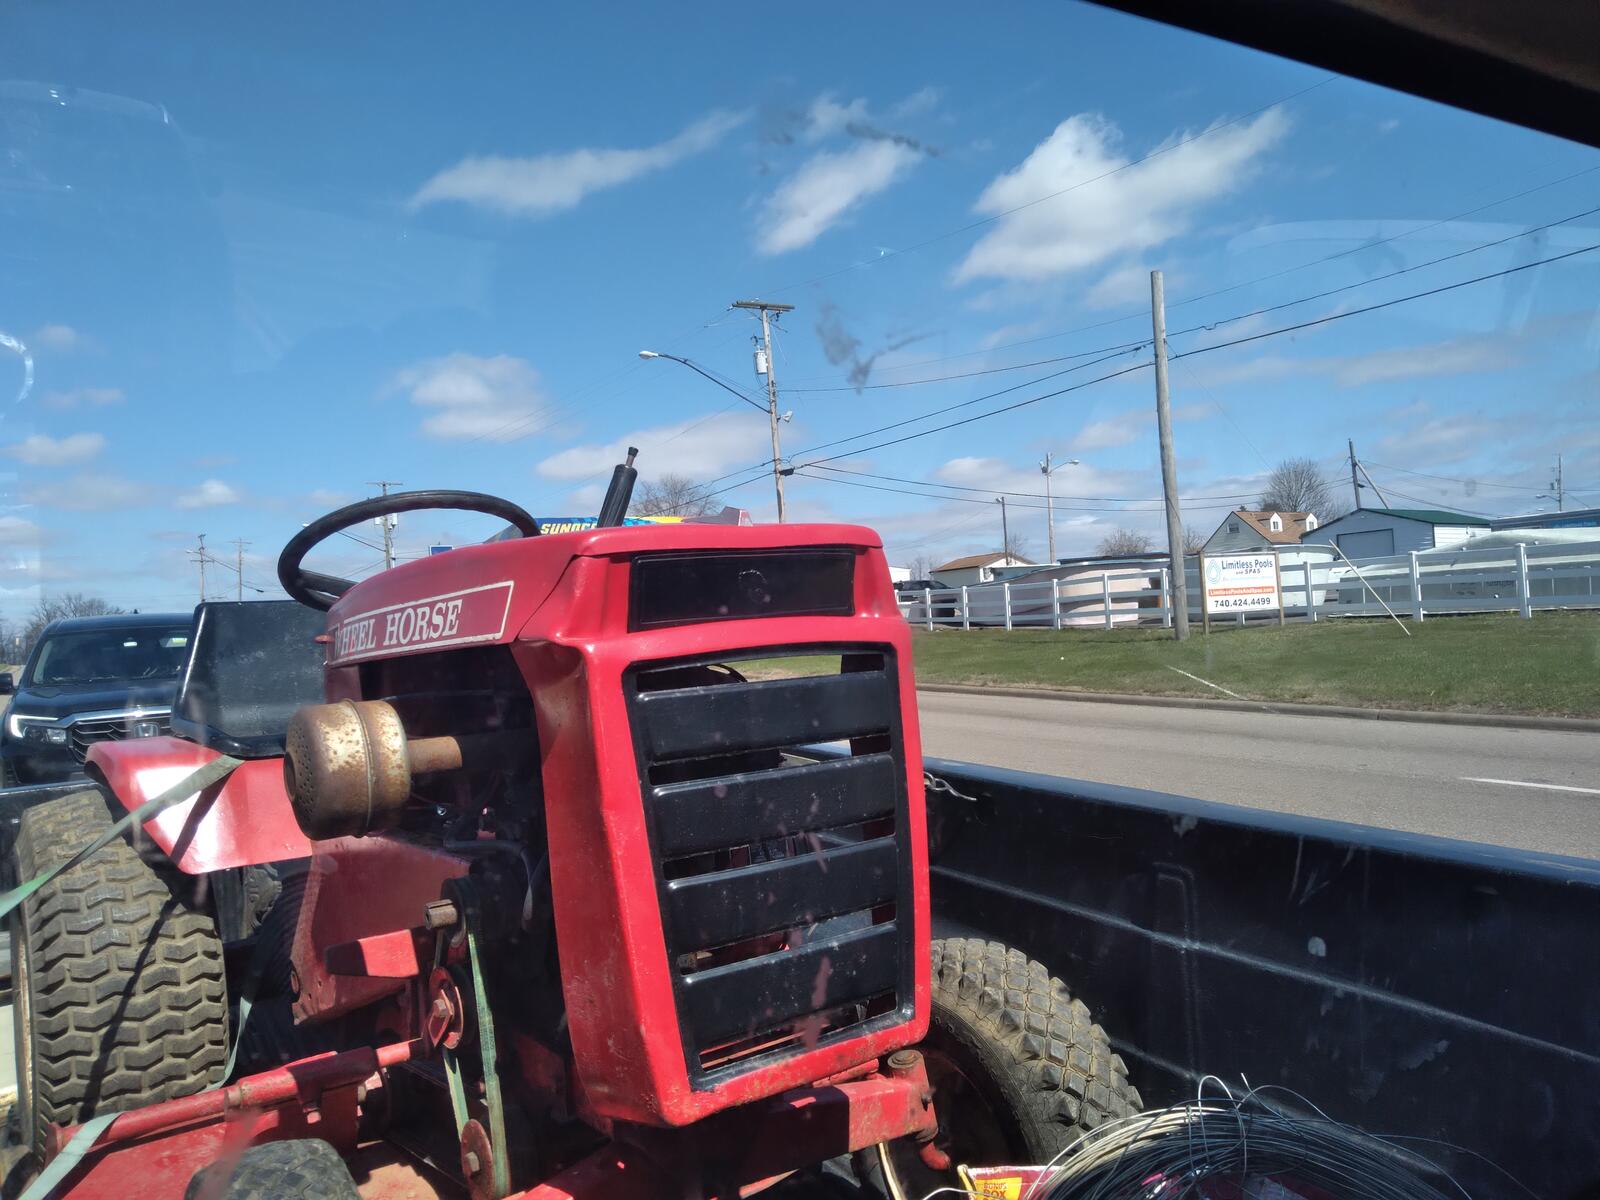 Mt tractor